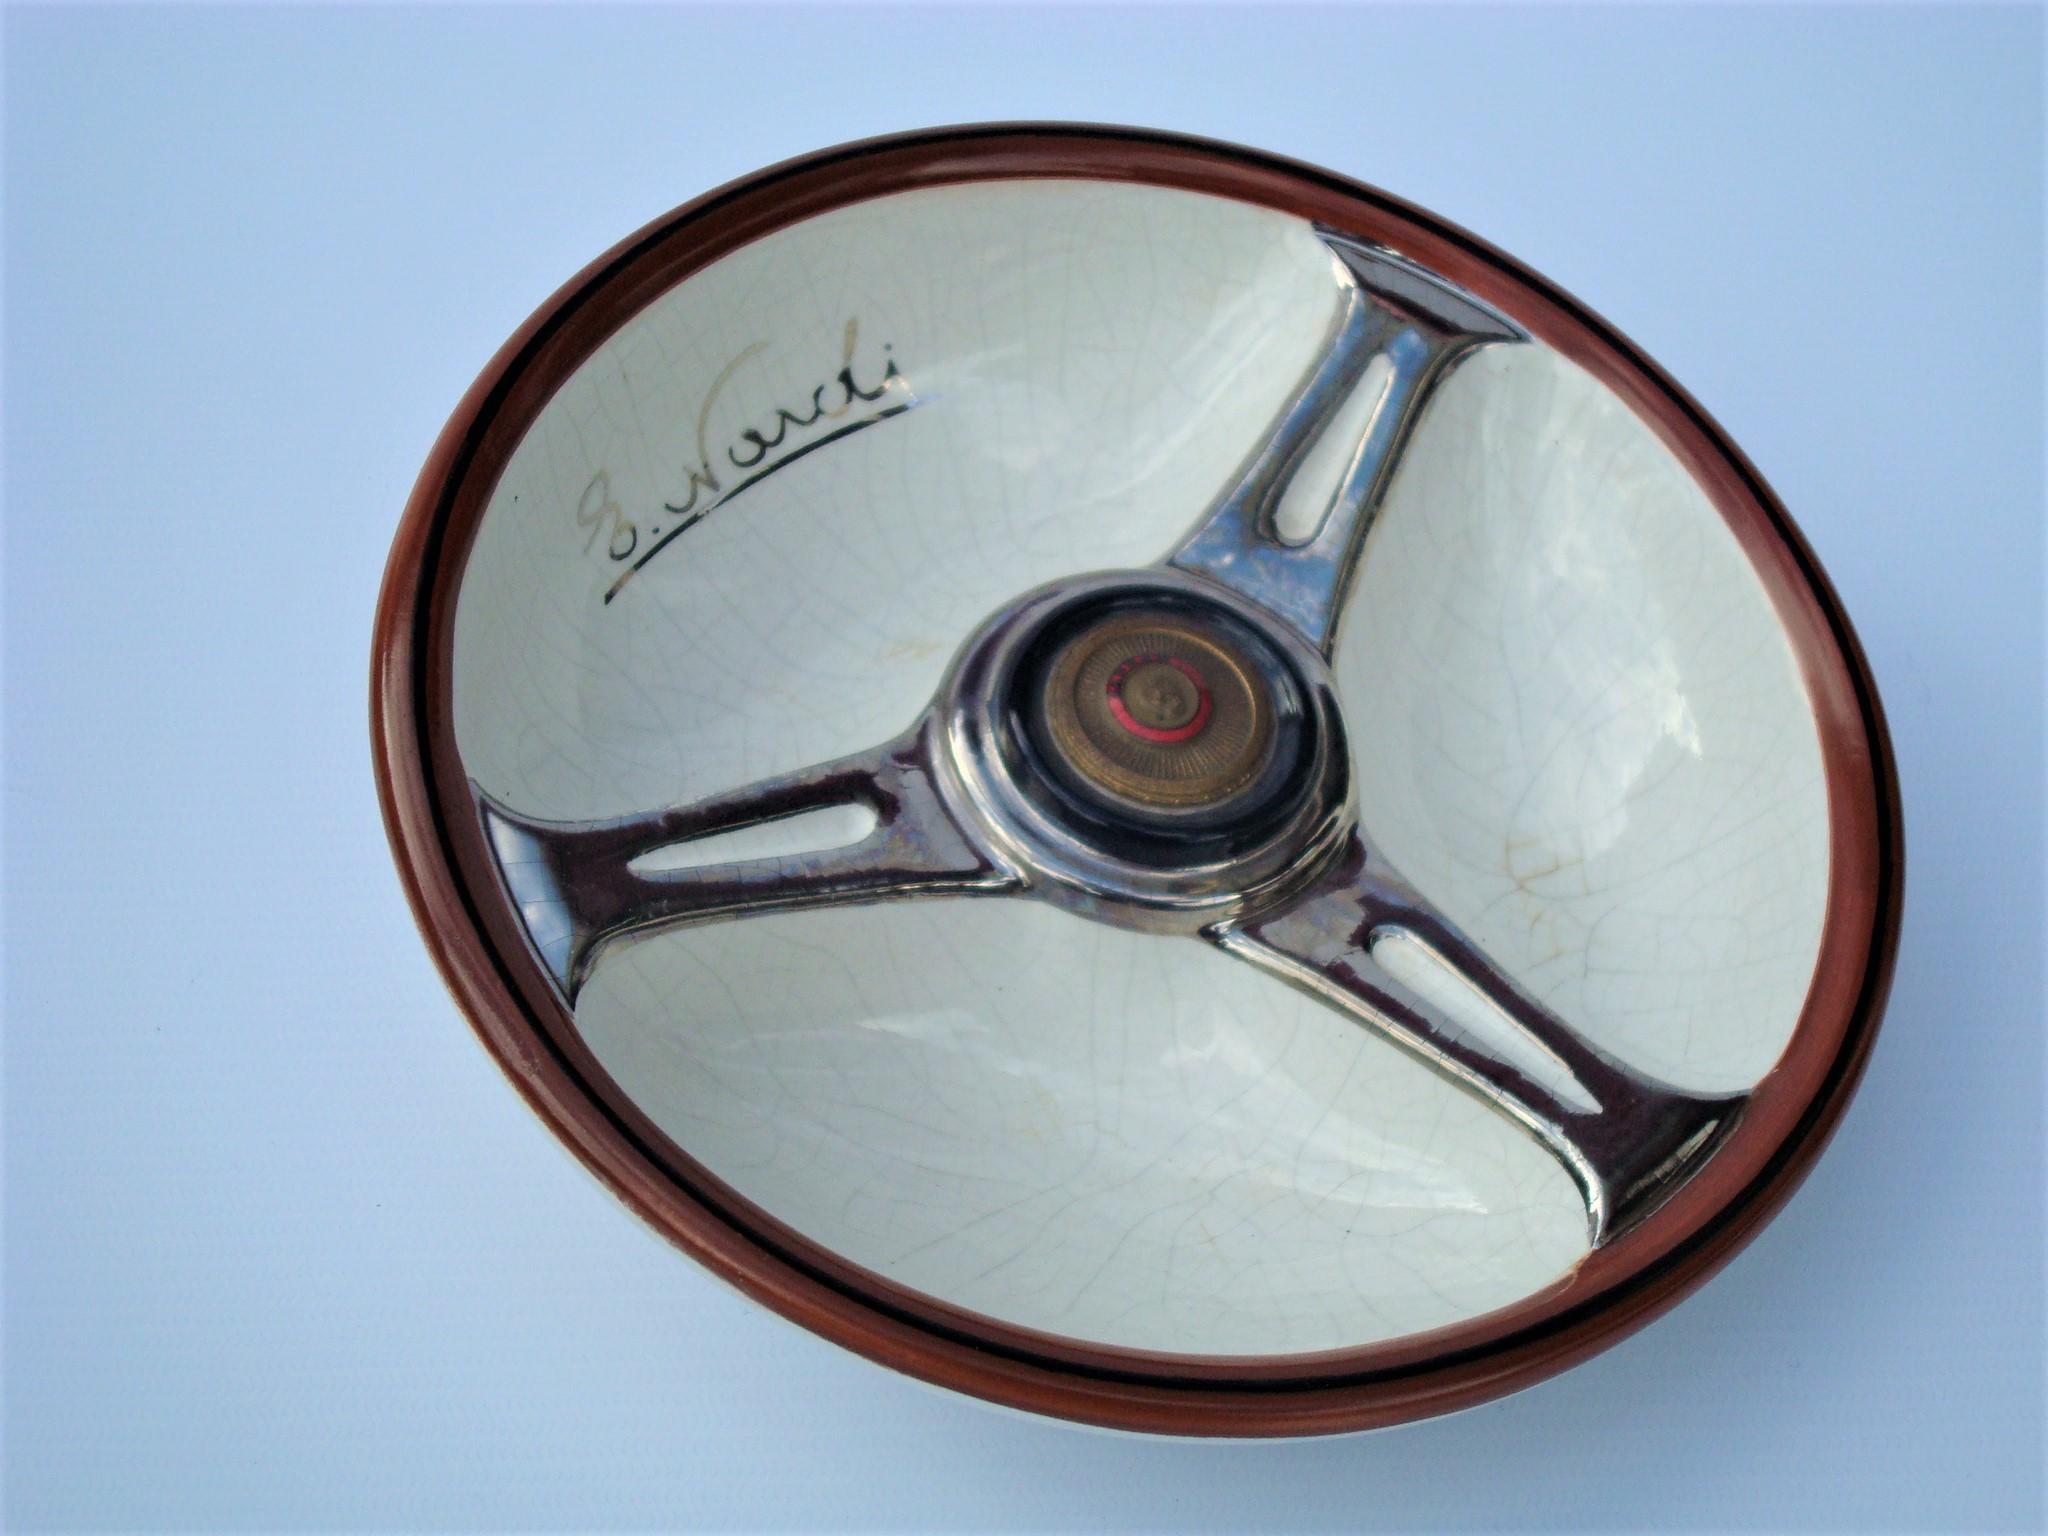 Enameled Nardi Jaguar Steering Wheel Ceramic Cigar Ashtray, Italy, ca. 1960's